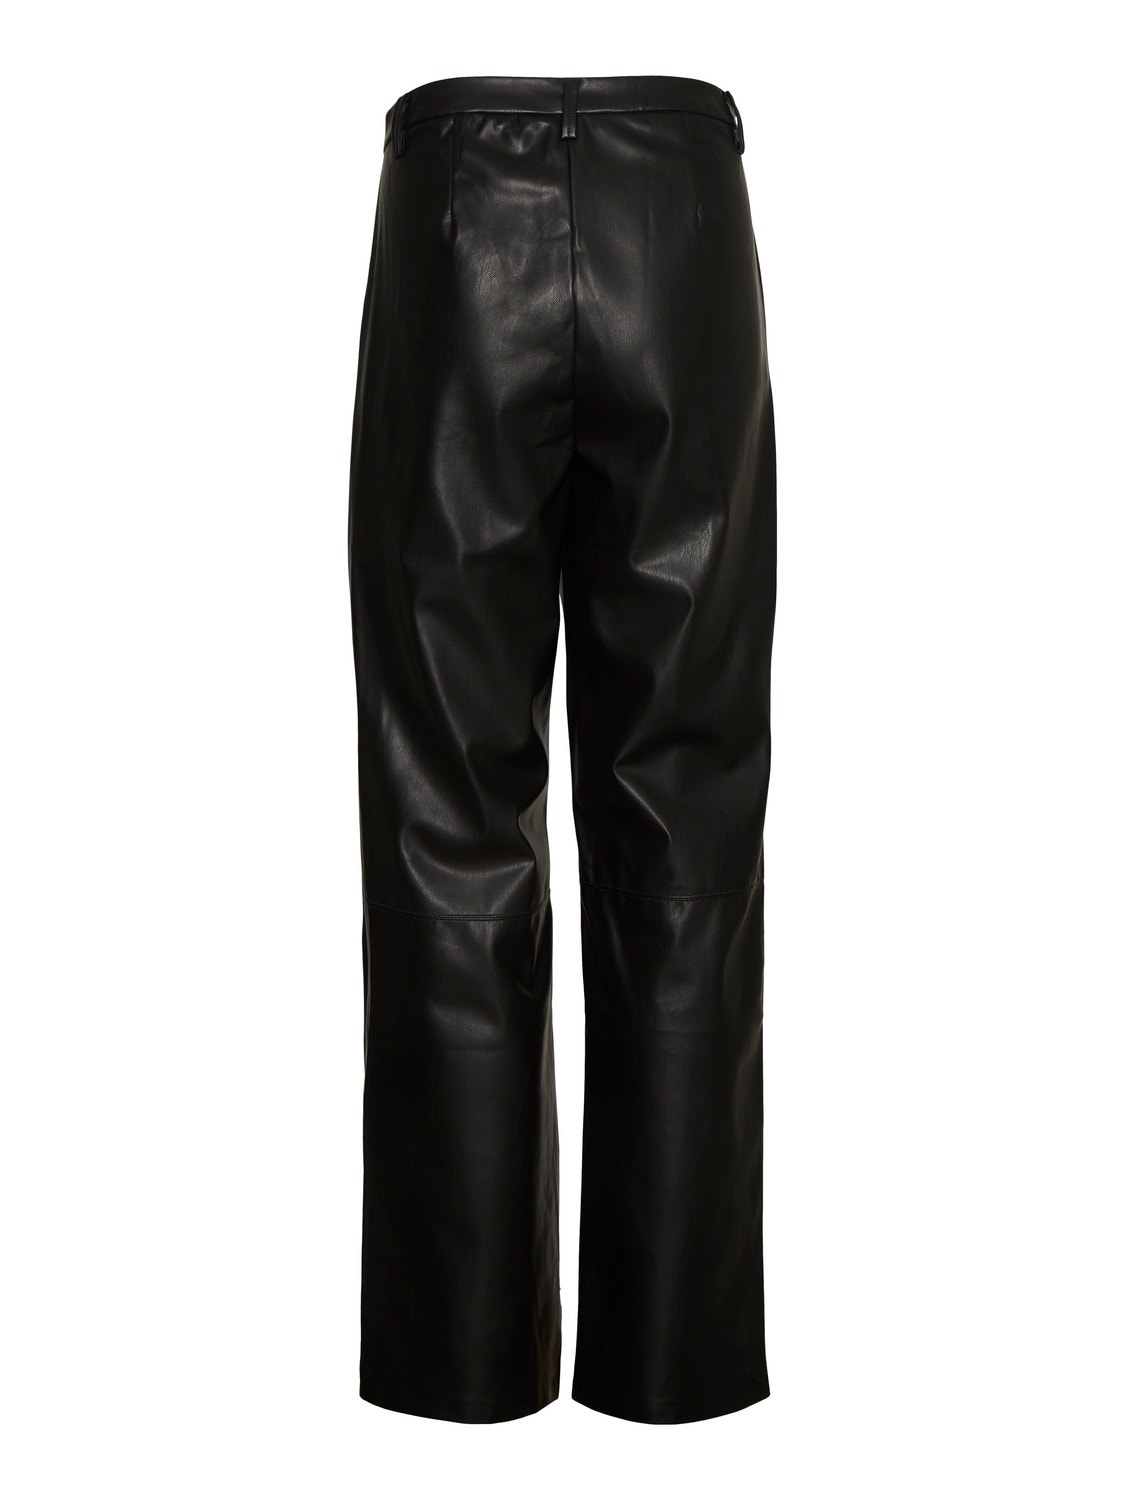 Vero Moda VMZAMIRAOLYMPIA Mid waist Trousers -Black - 10274443